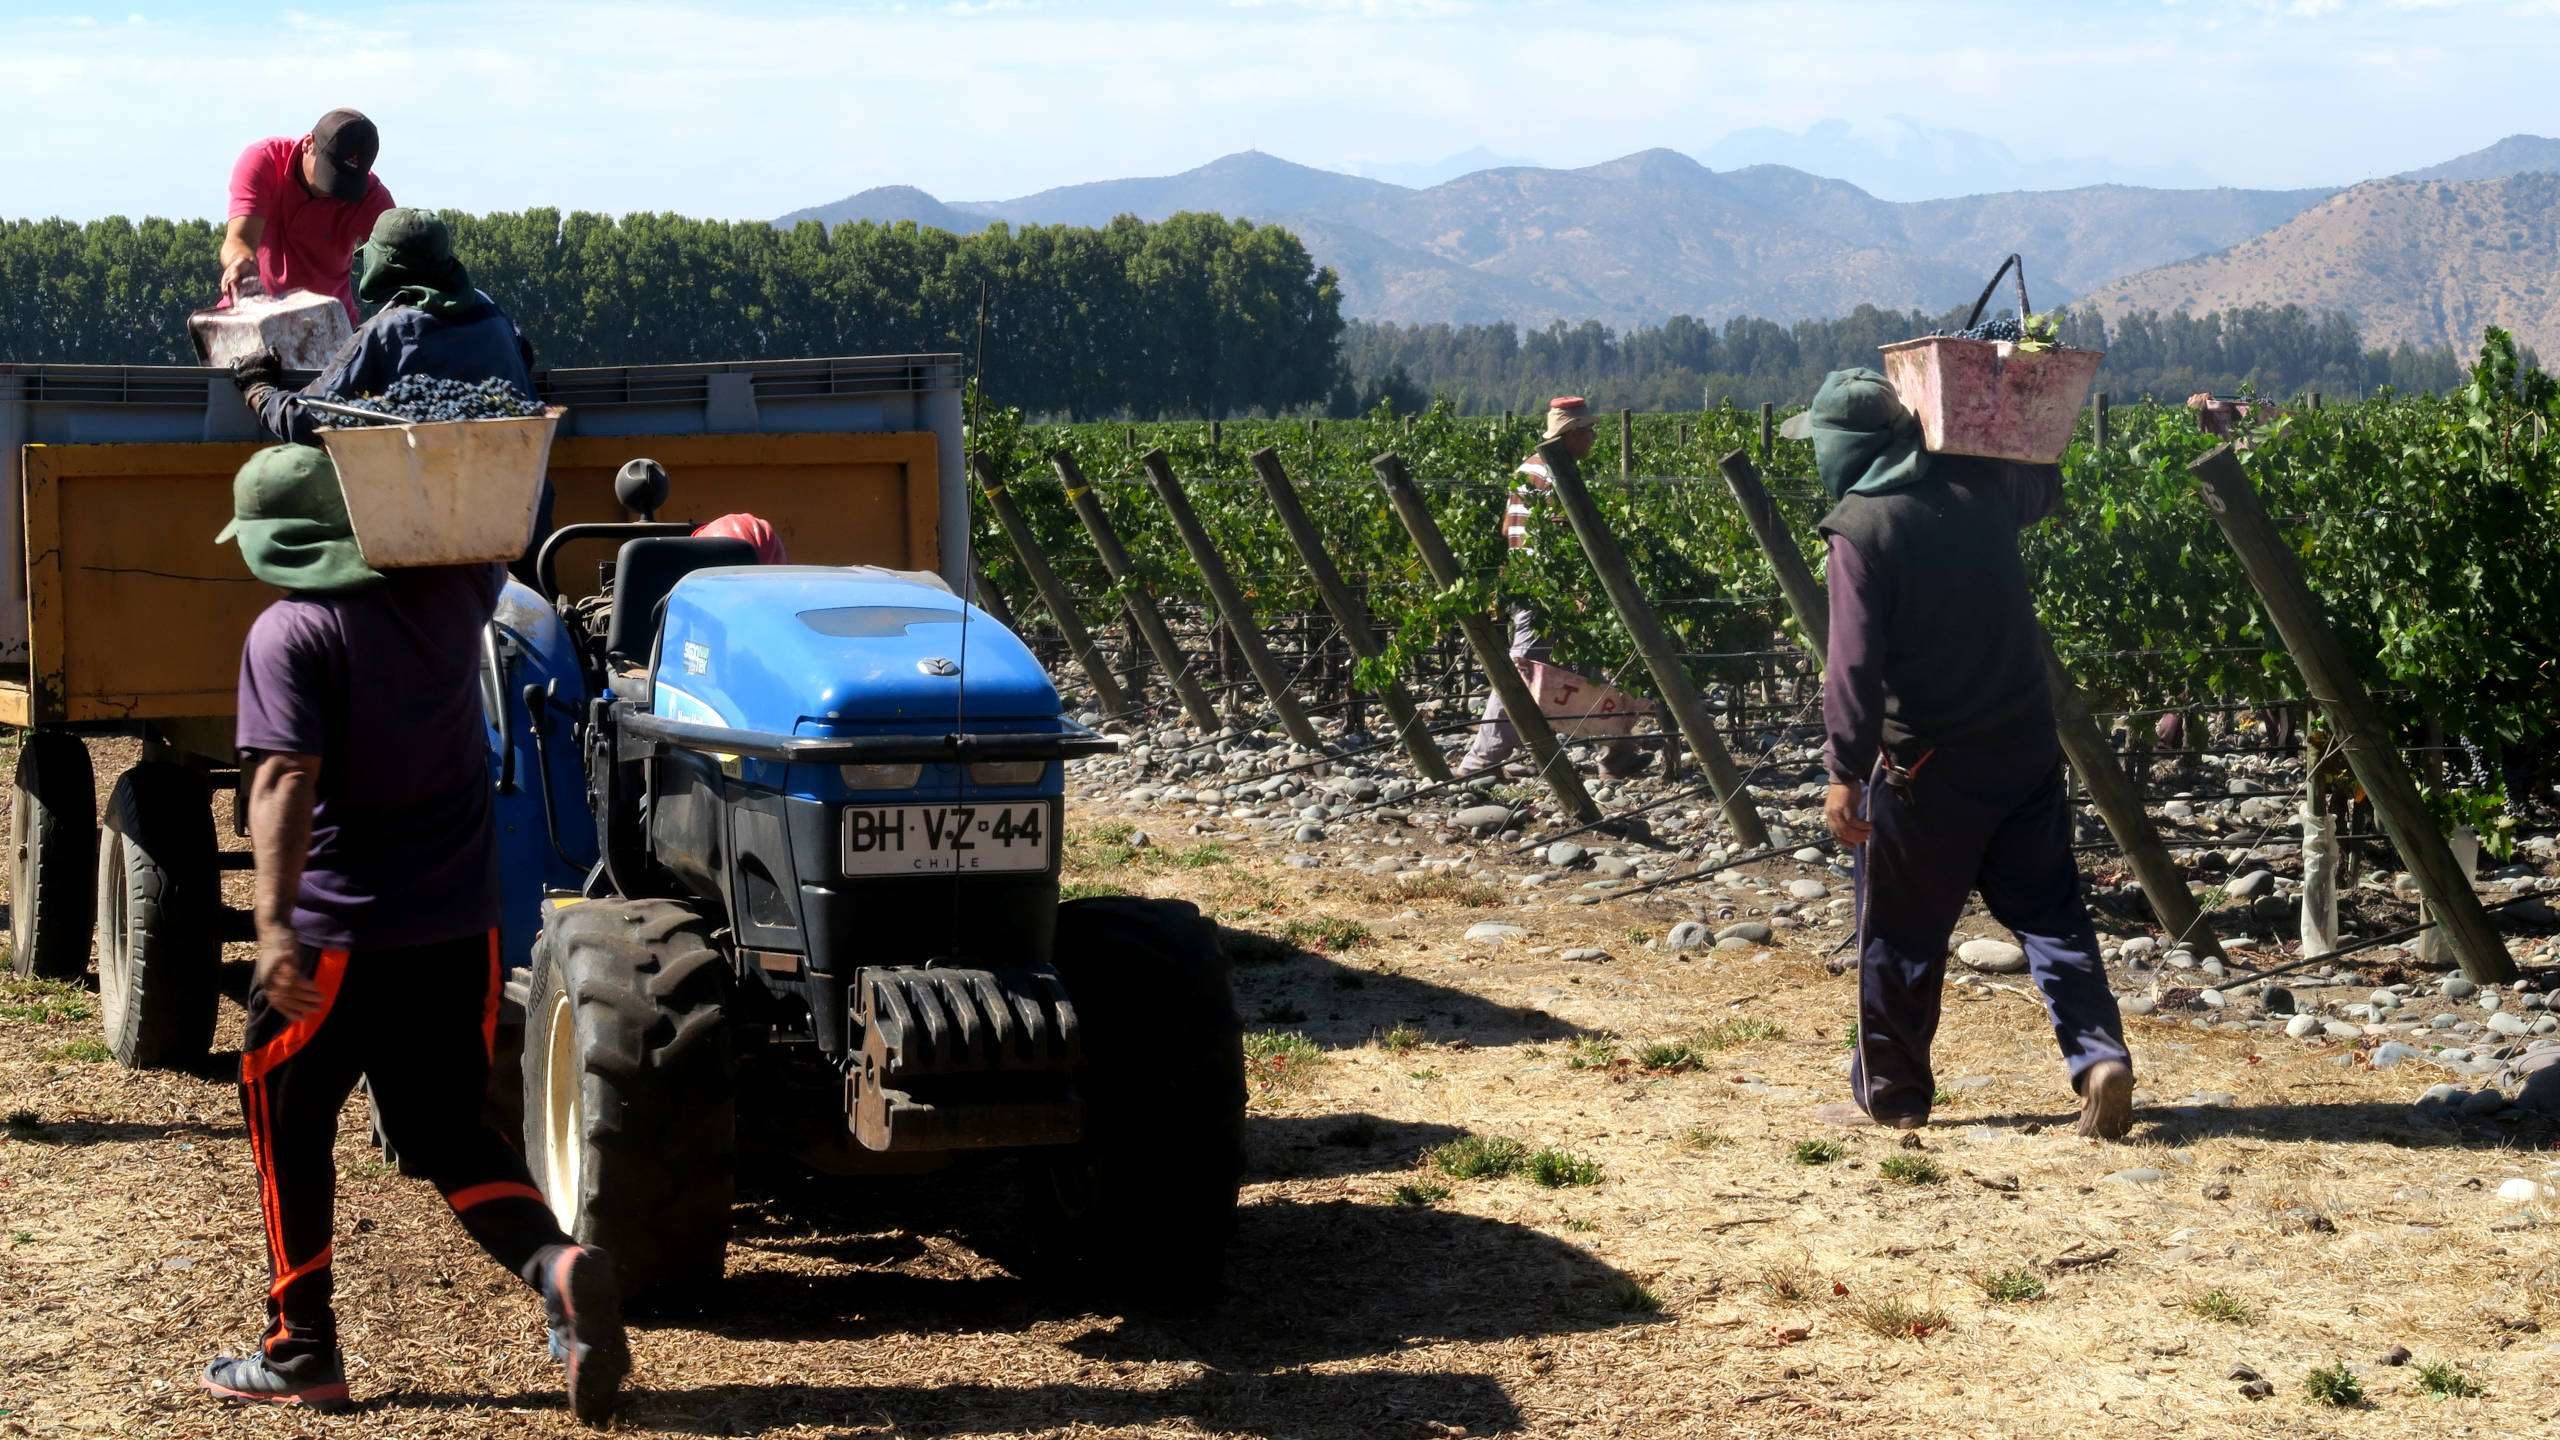 Tractors on the De Martino vineyards